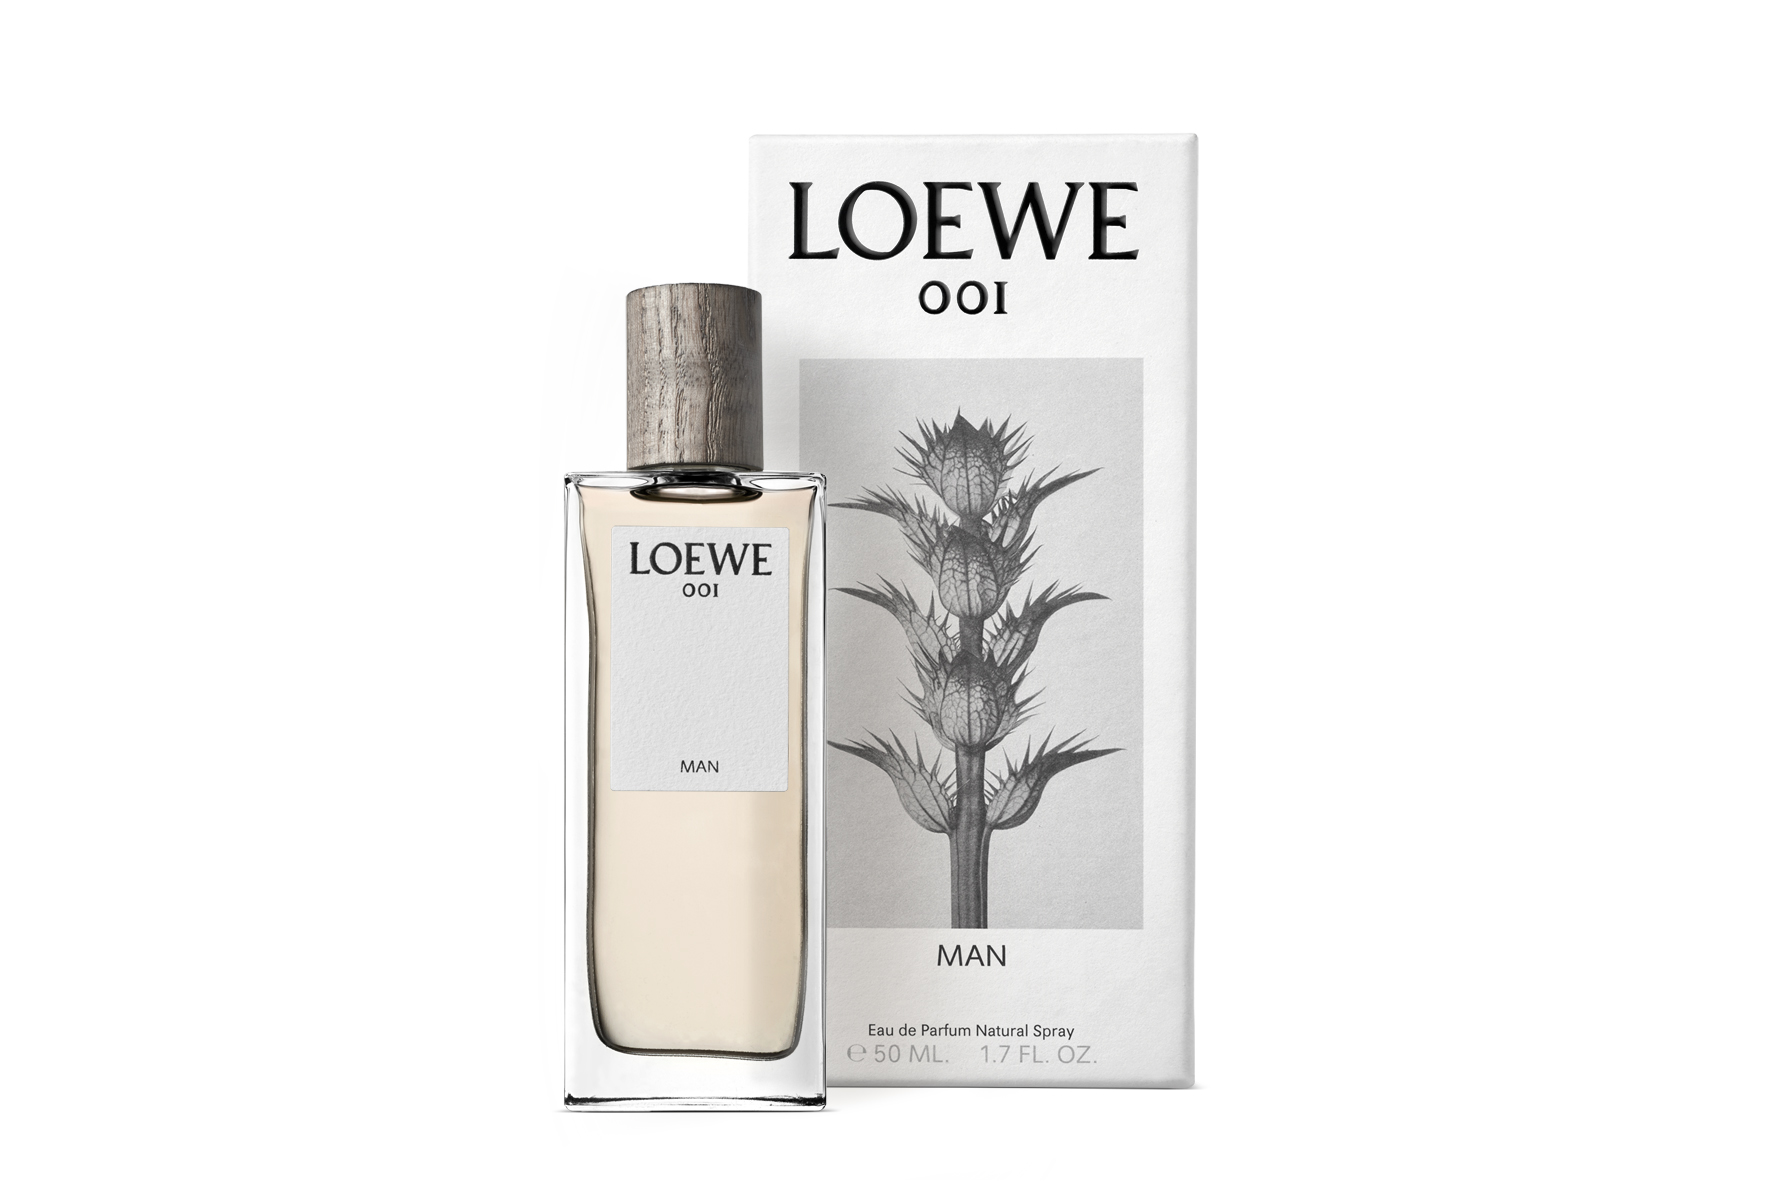 Парфюм лоеве. Loewe духи 001 woman. Loewe 001 man. Loewe 001 woman Eau de Parfum 50ml. Туалетная вода Loewe Ooi мужская.